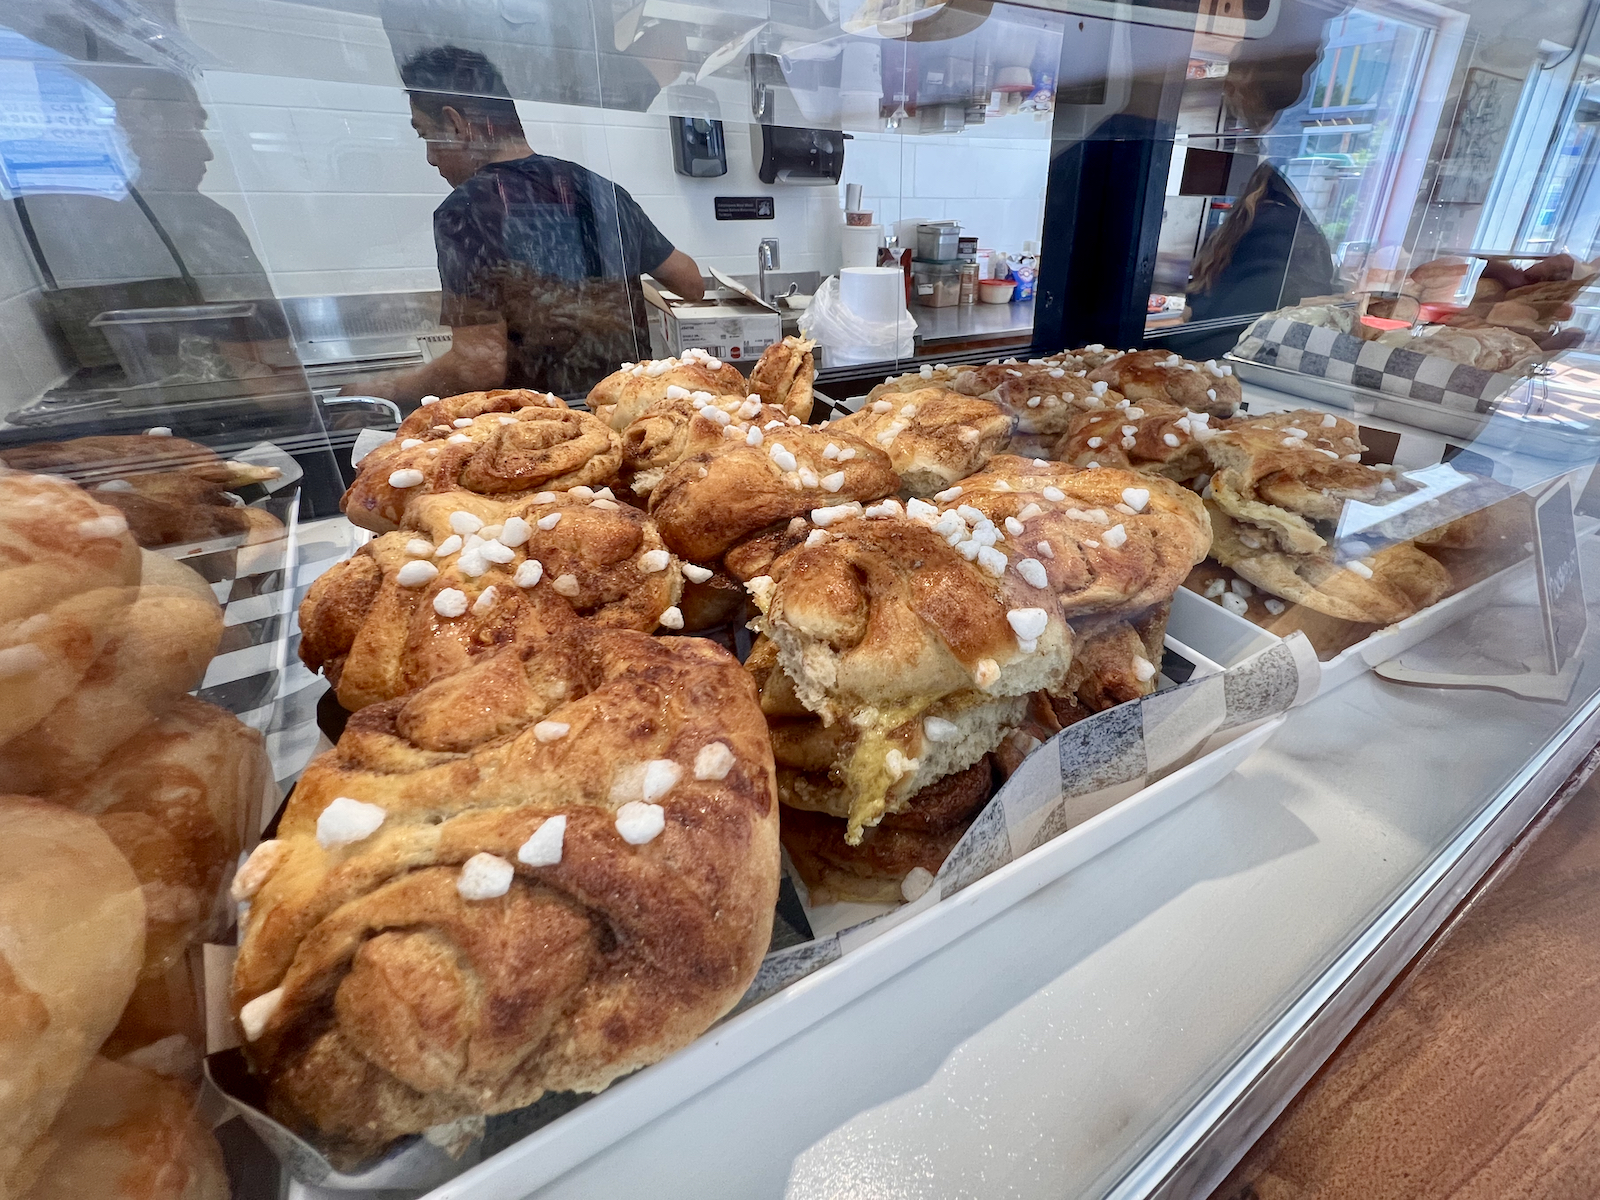 Finnish pastries